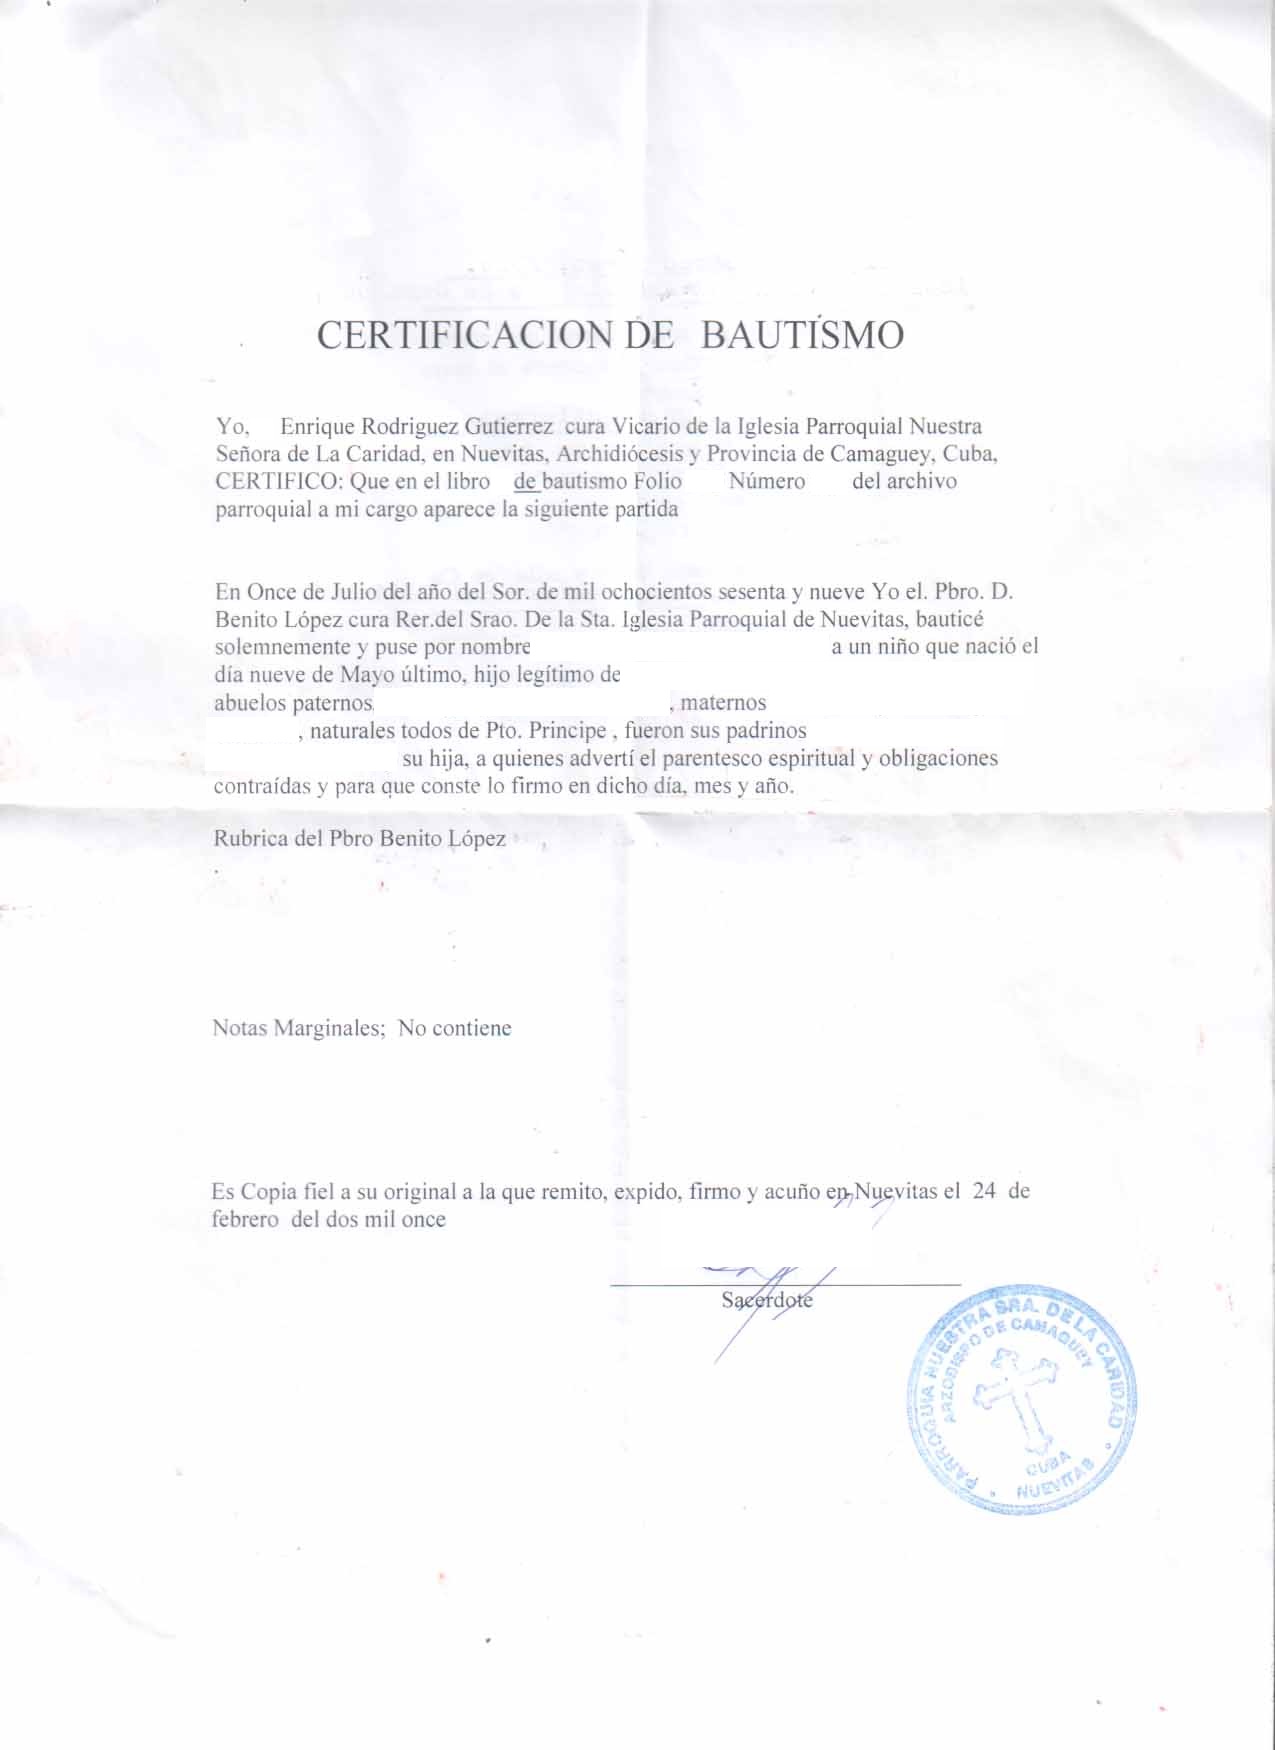 baptismal certificate from Cuba